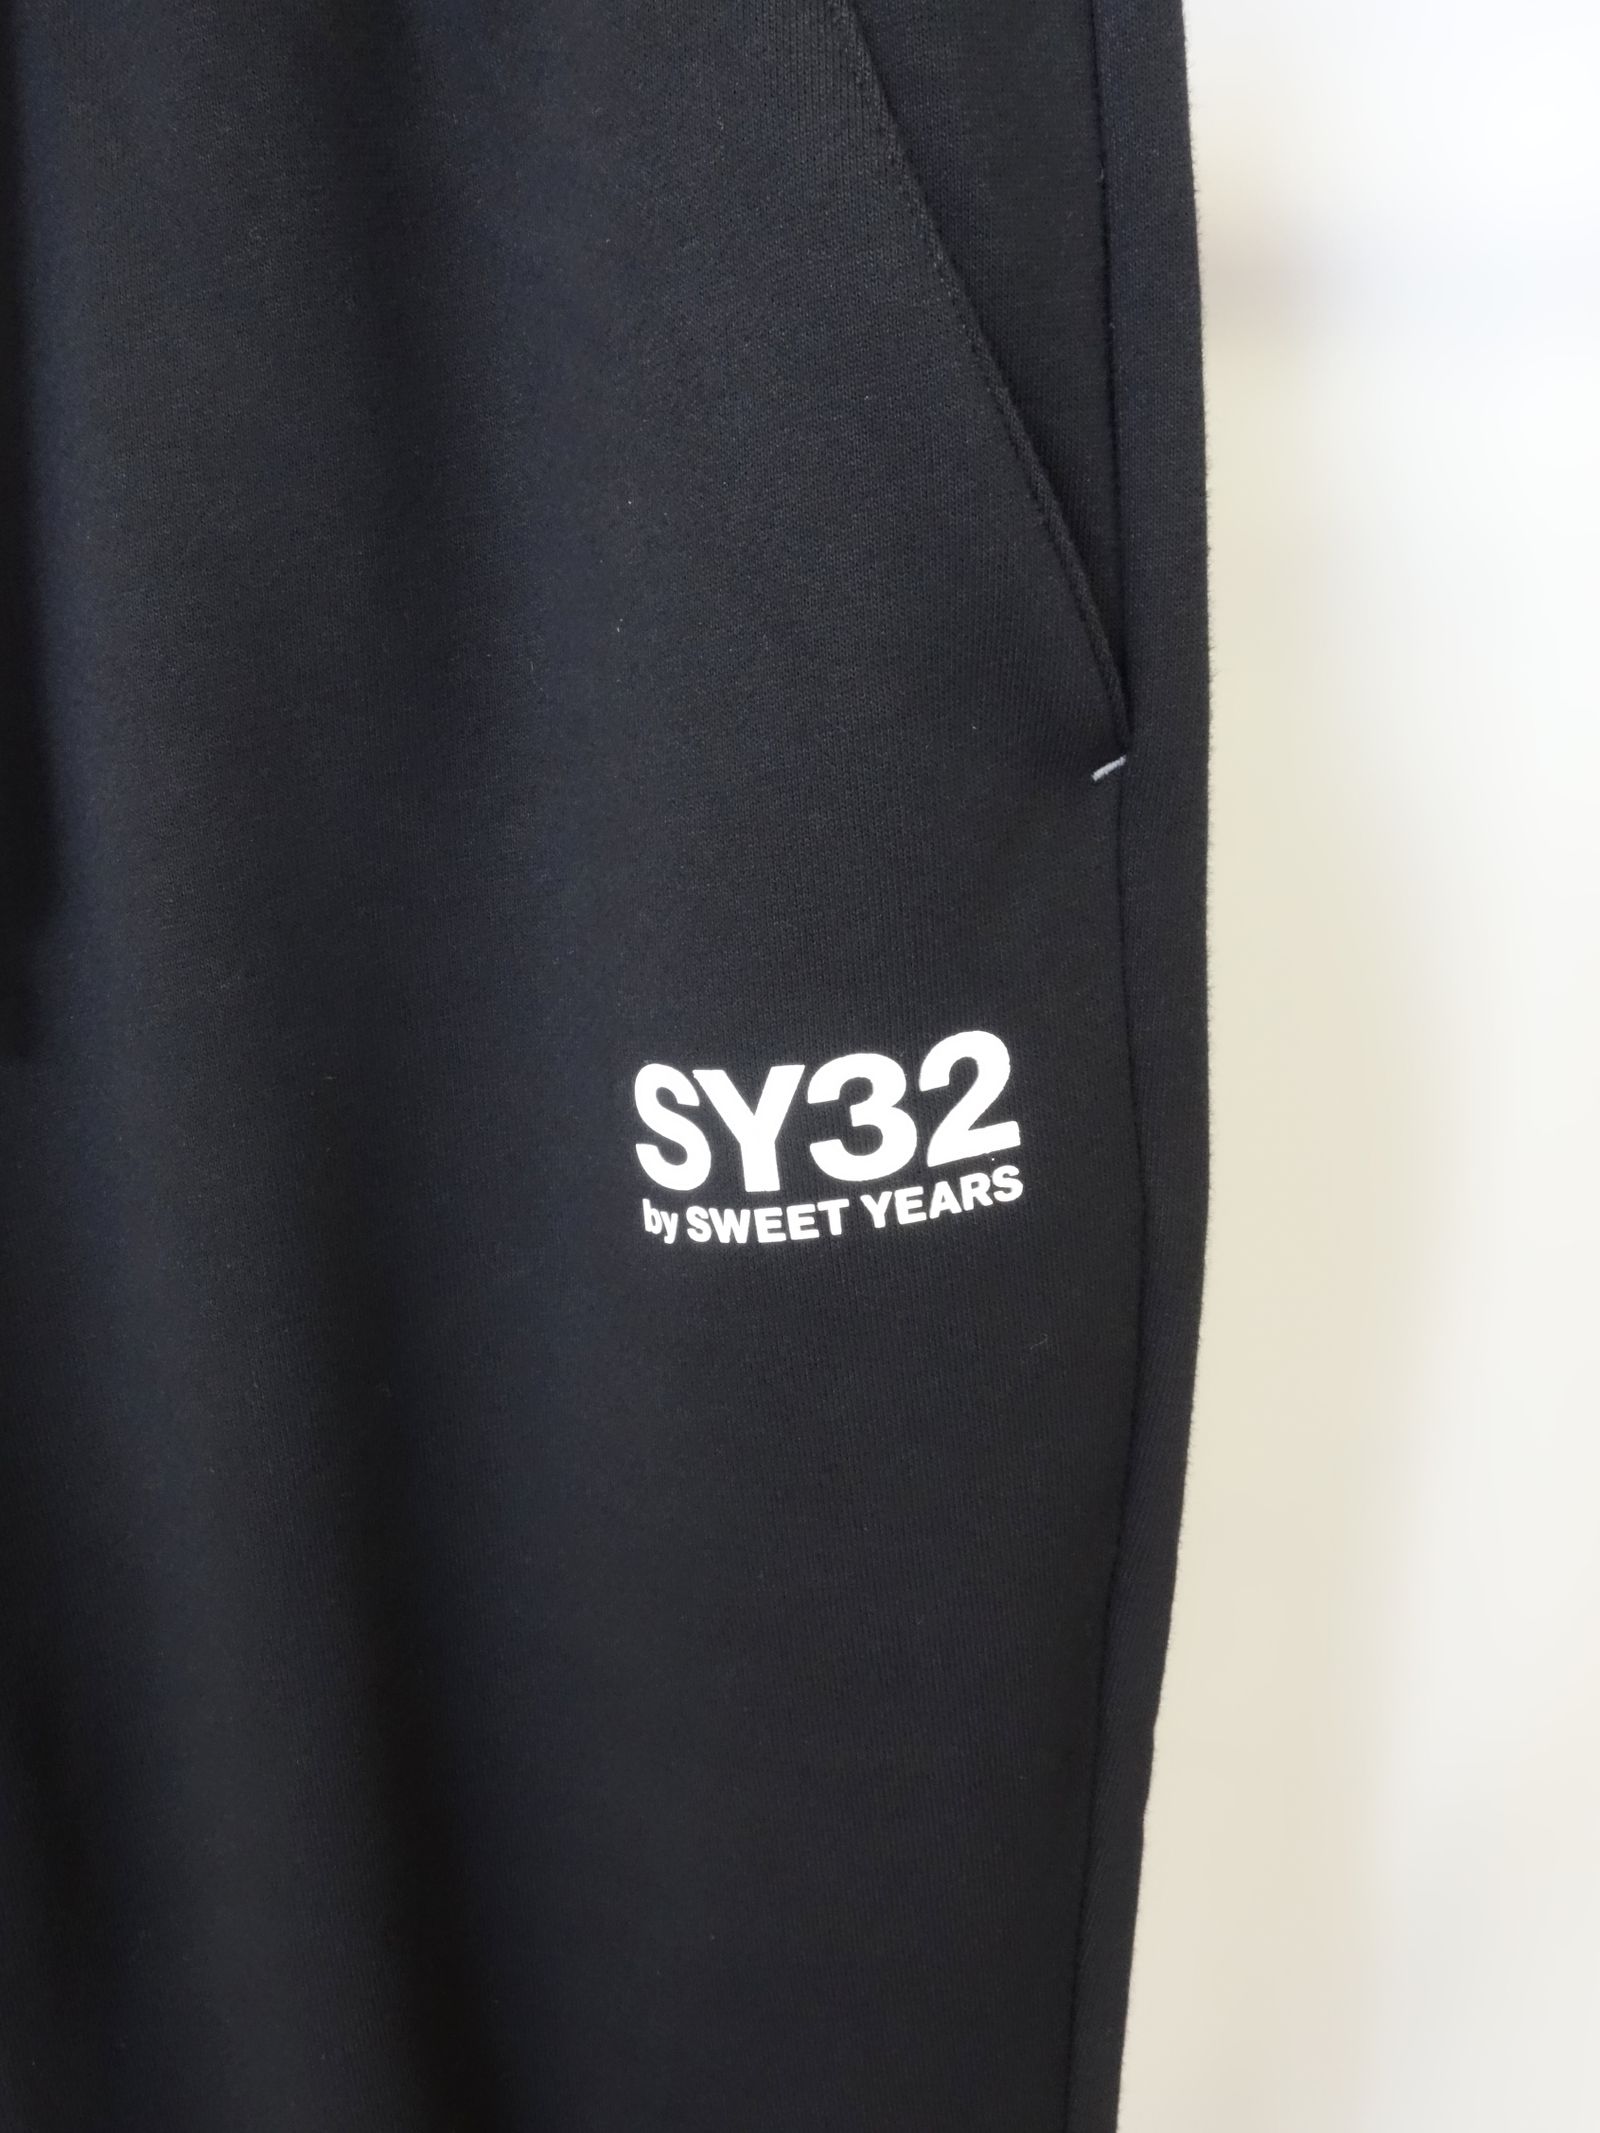 SY32 by SWEET YEARS - BASIC ZIP SWEAT SETUP / TNS1703_2,TNS1706 